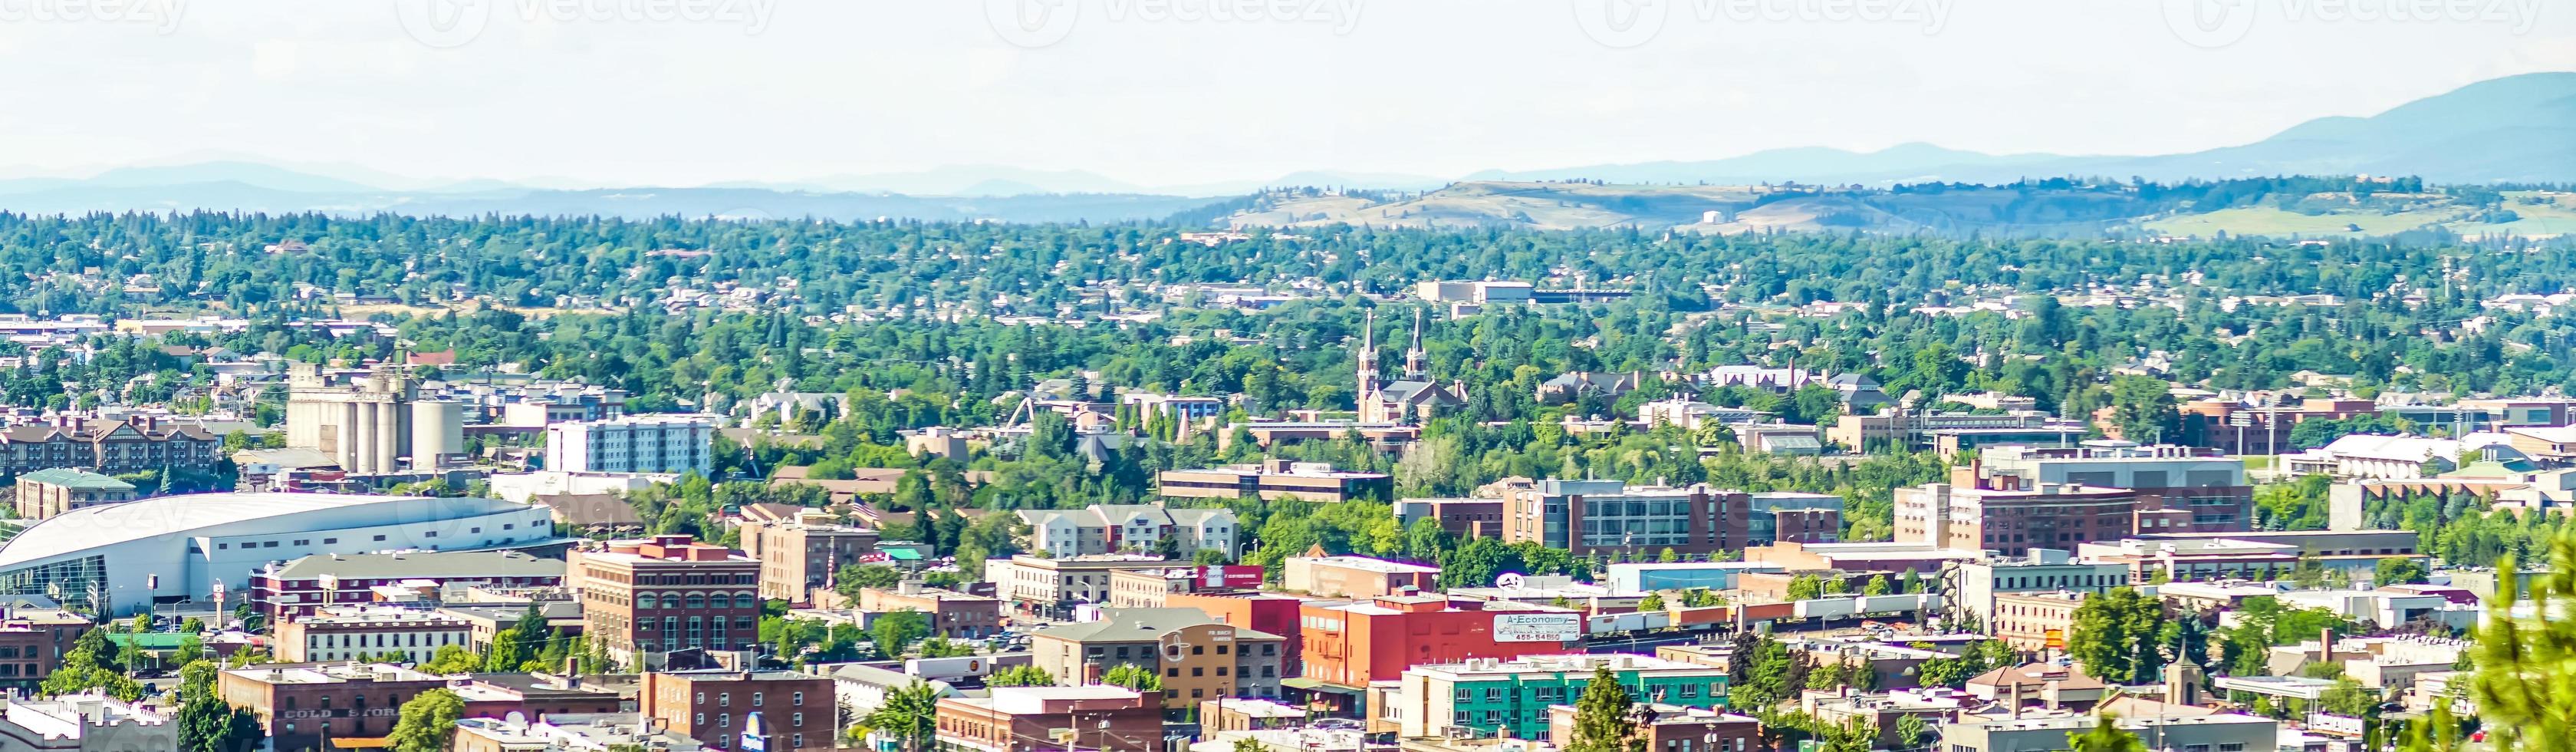 Spokane Washington City skyline en Spokane Valley uitzicht foto